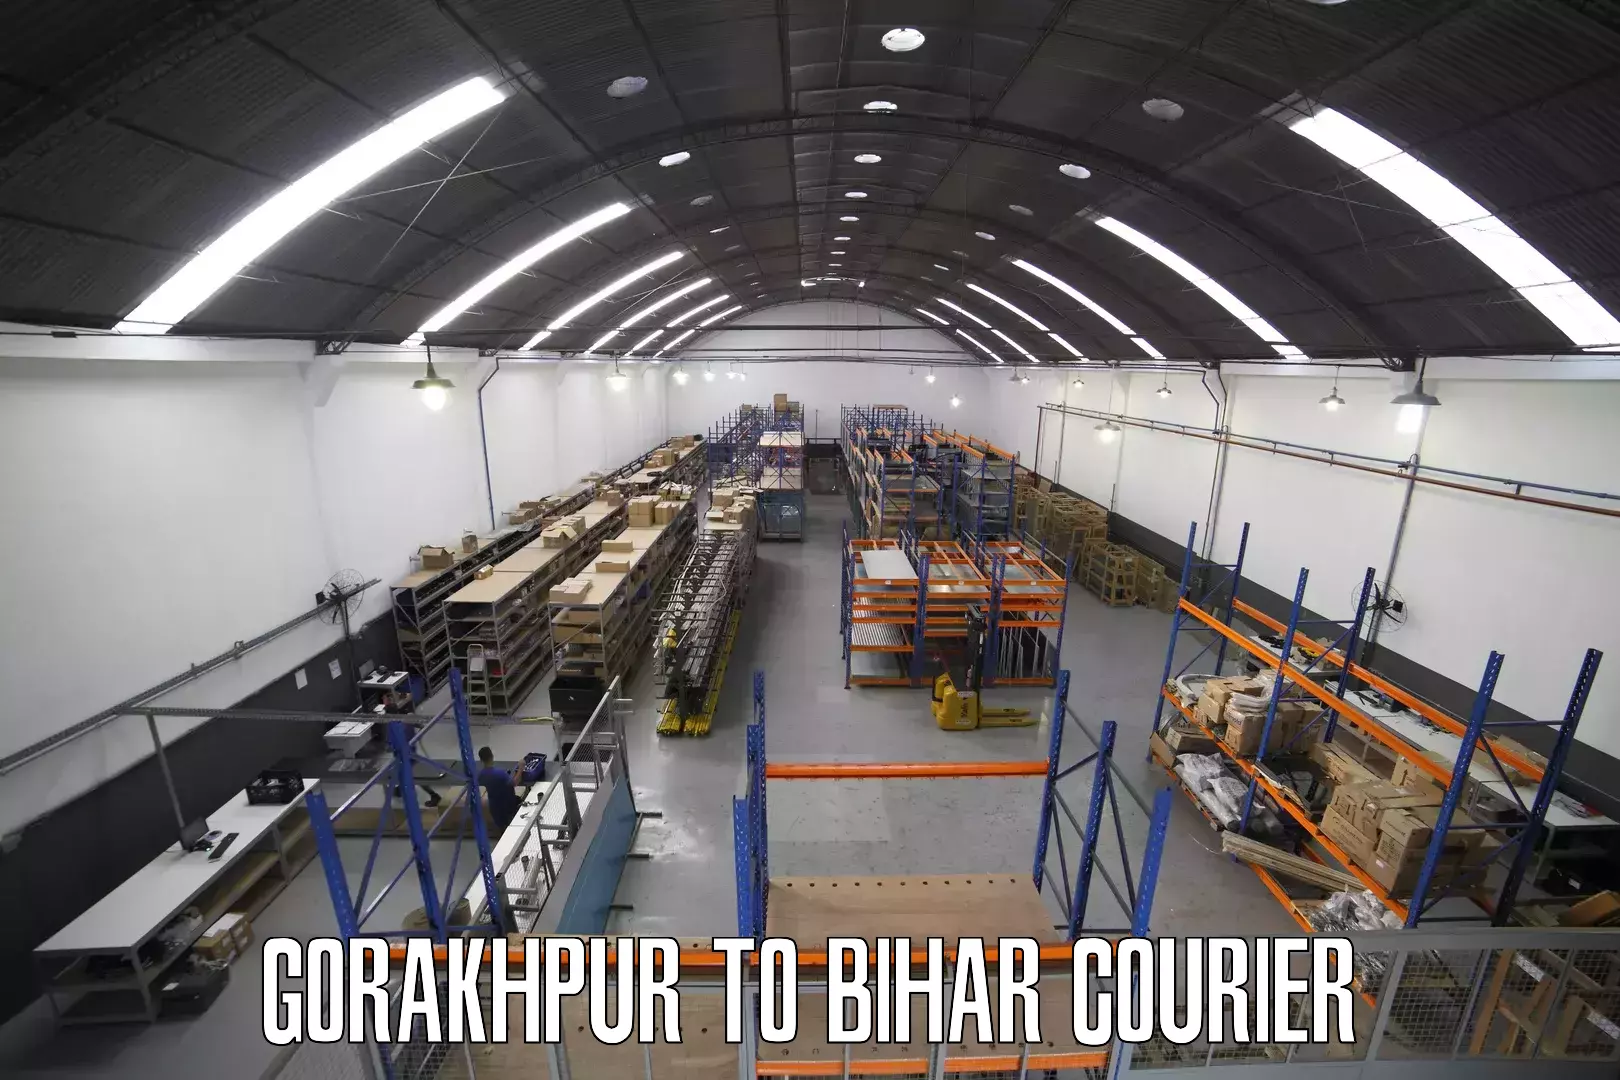 State-of-the-art courier technology Gorakhpur to Mairwa